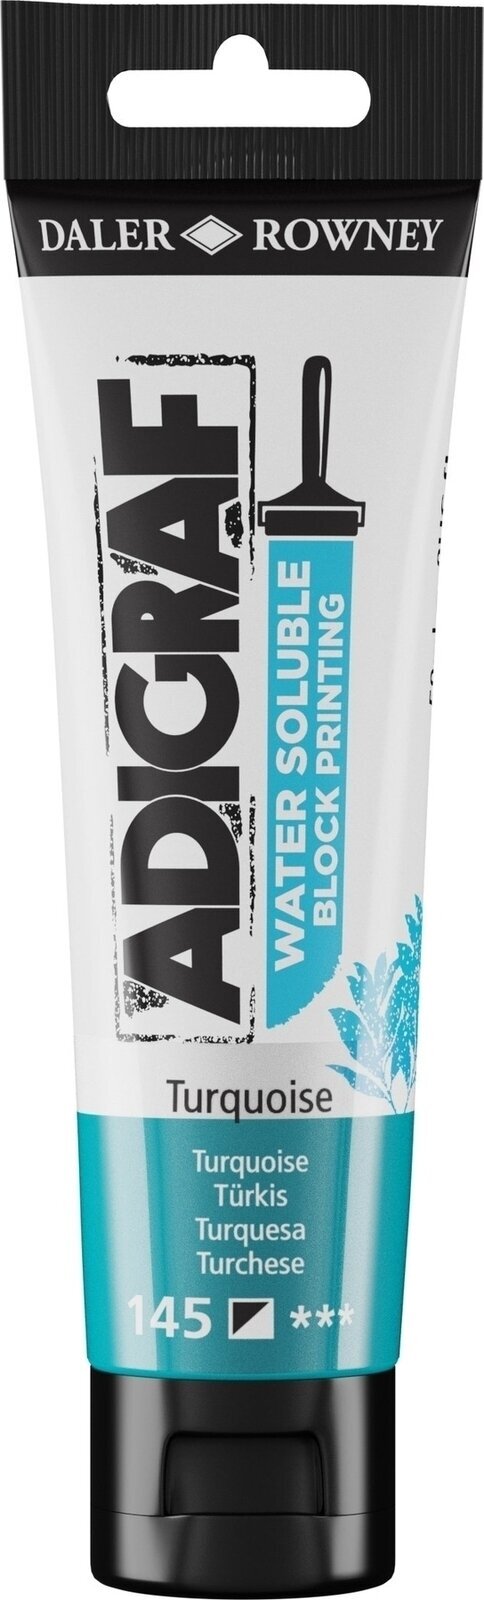 Vernice per linoleografia Daler Rowney Adigraf Block Printing Water Soluble Colour Vernice per linoleografia Turquoise 59 ml